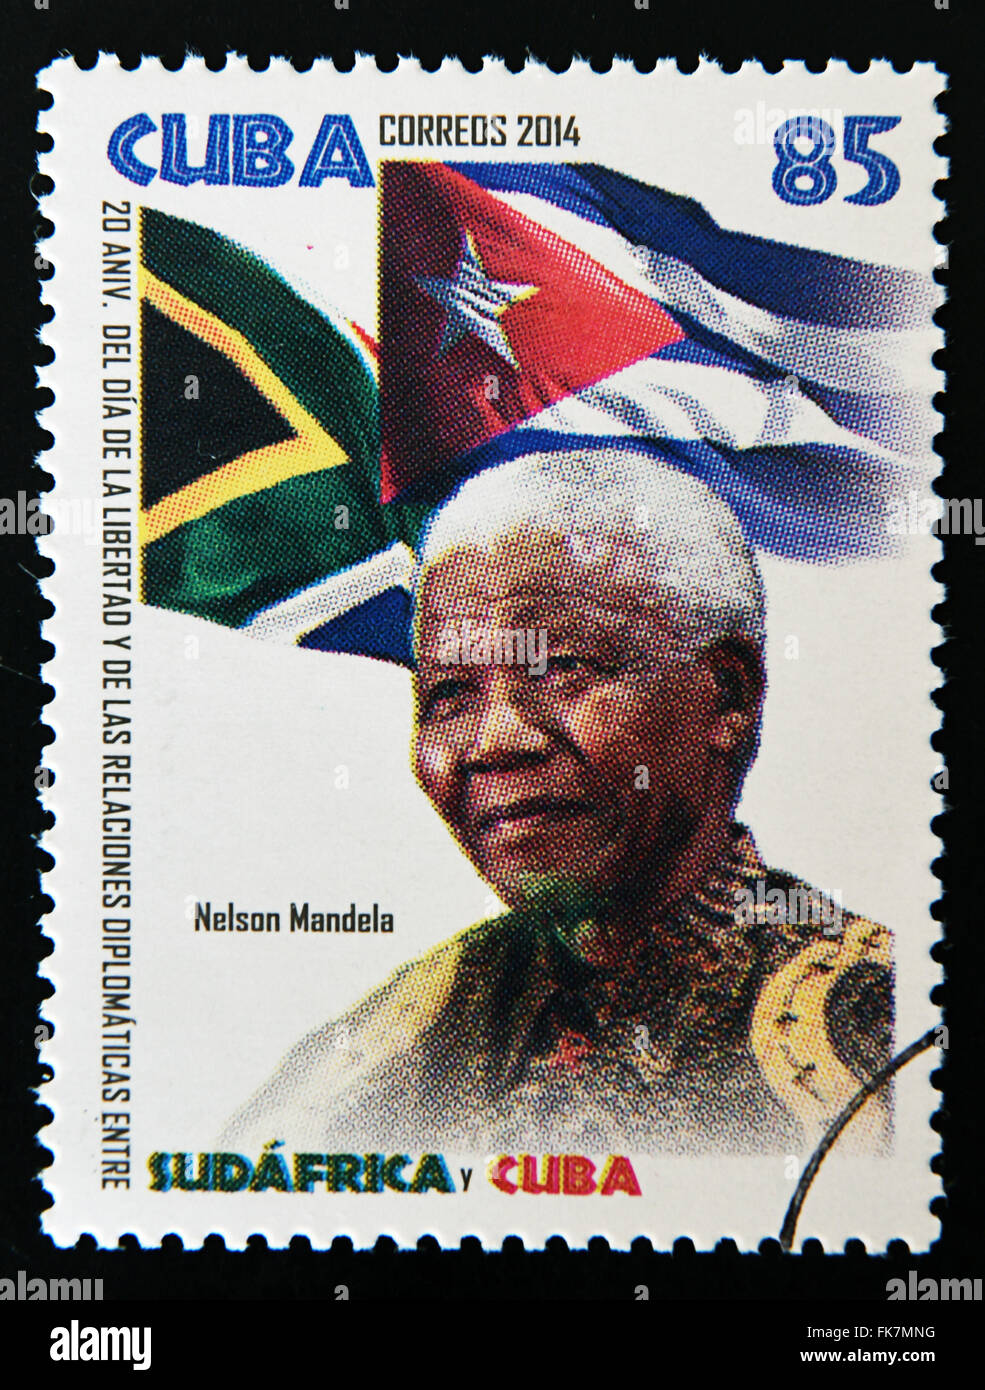 CUBA - circa 2014 : timbre imprimé en Cuba montre Nelson Mandela, circa 2014 Banque D'Images